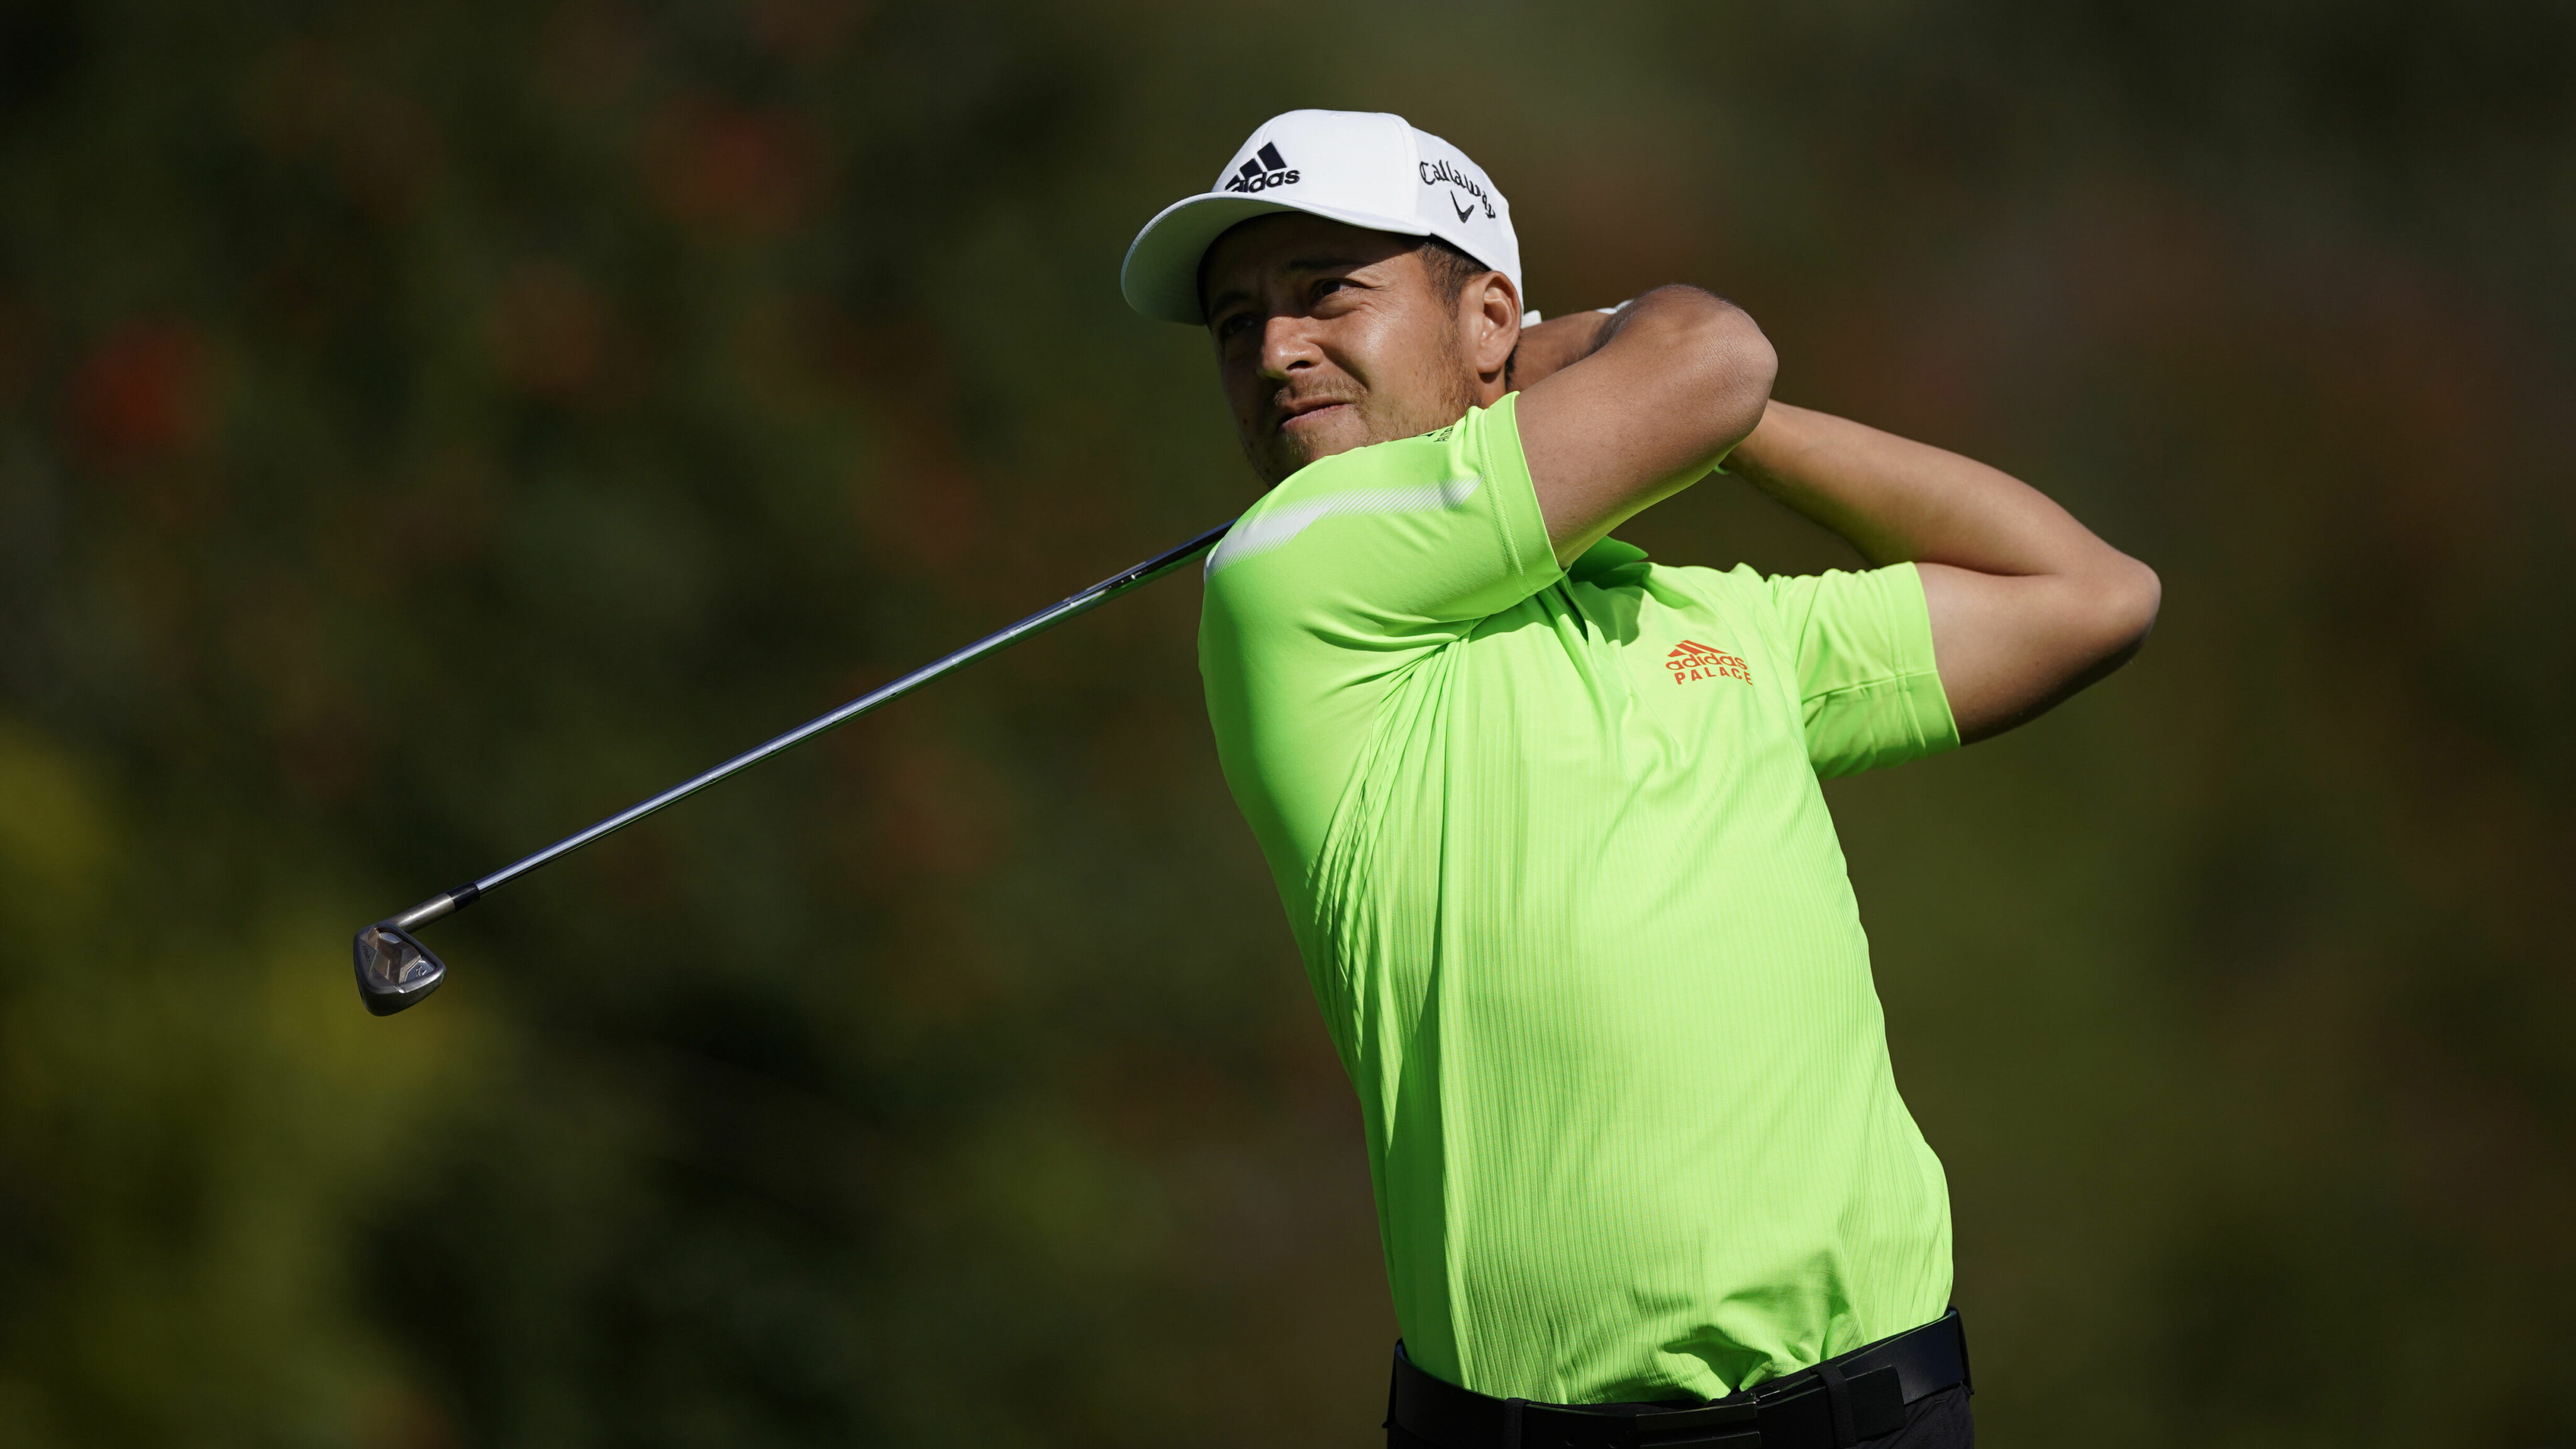 Pro golfer Xander Schauffele reflects ahead of PGA Tour’s return WTOP